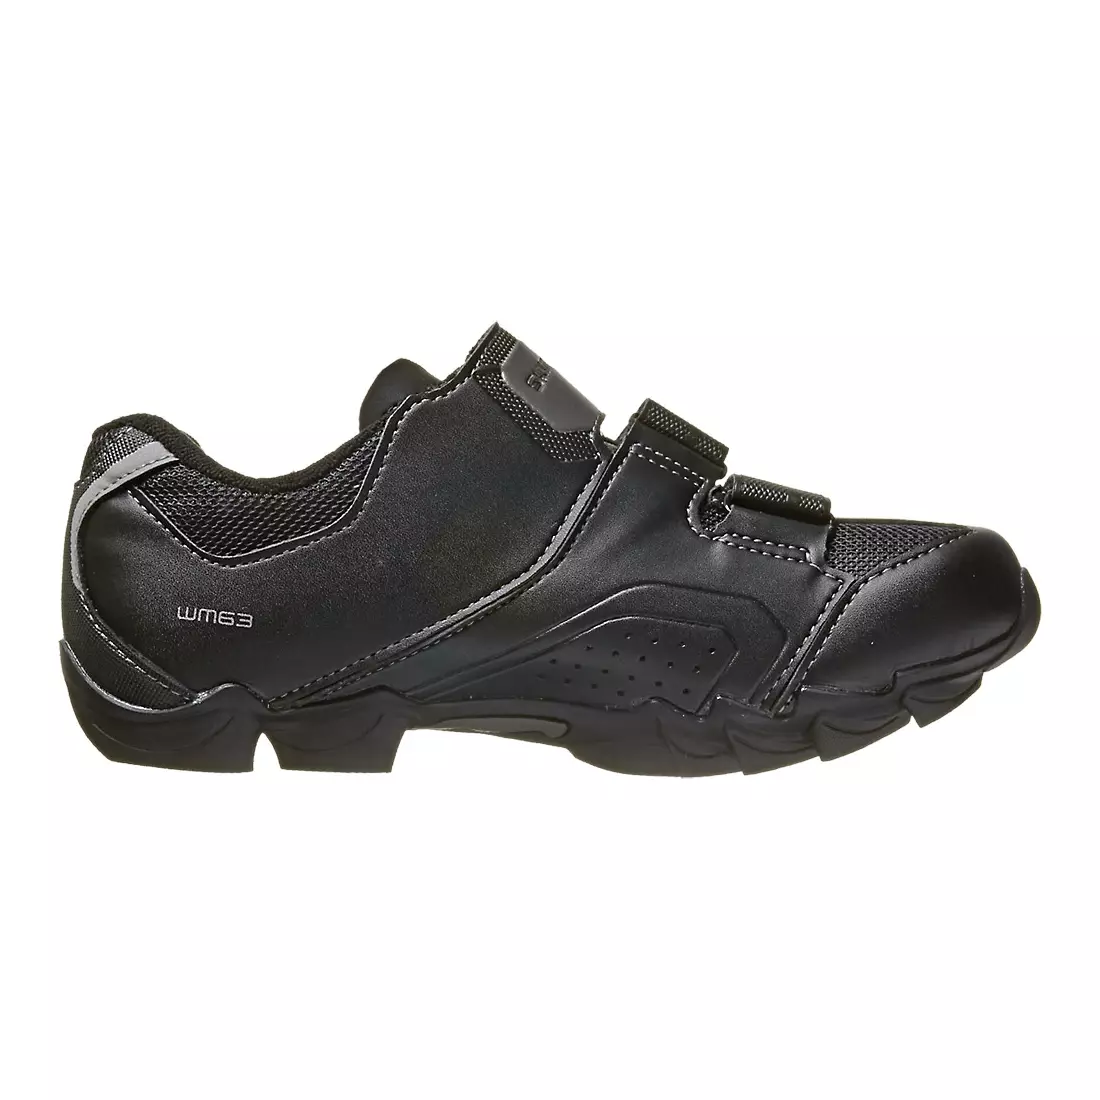 SHIMANO SH-WM63 - női kerékpáros cipő, színe: fekete